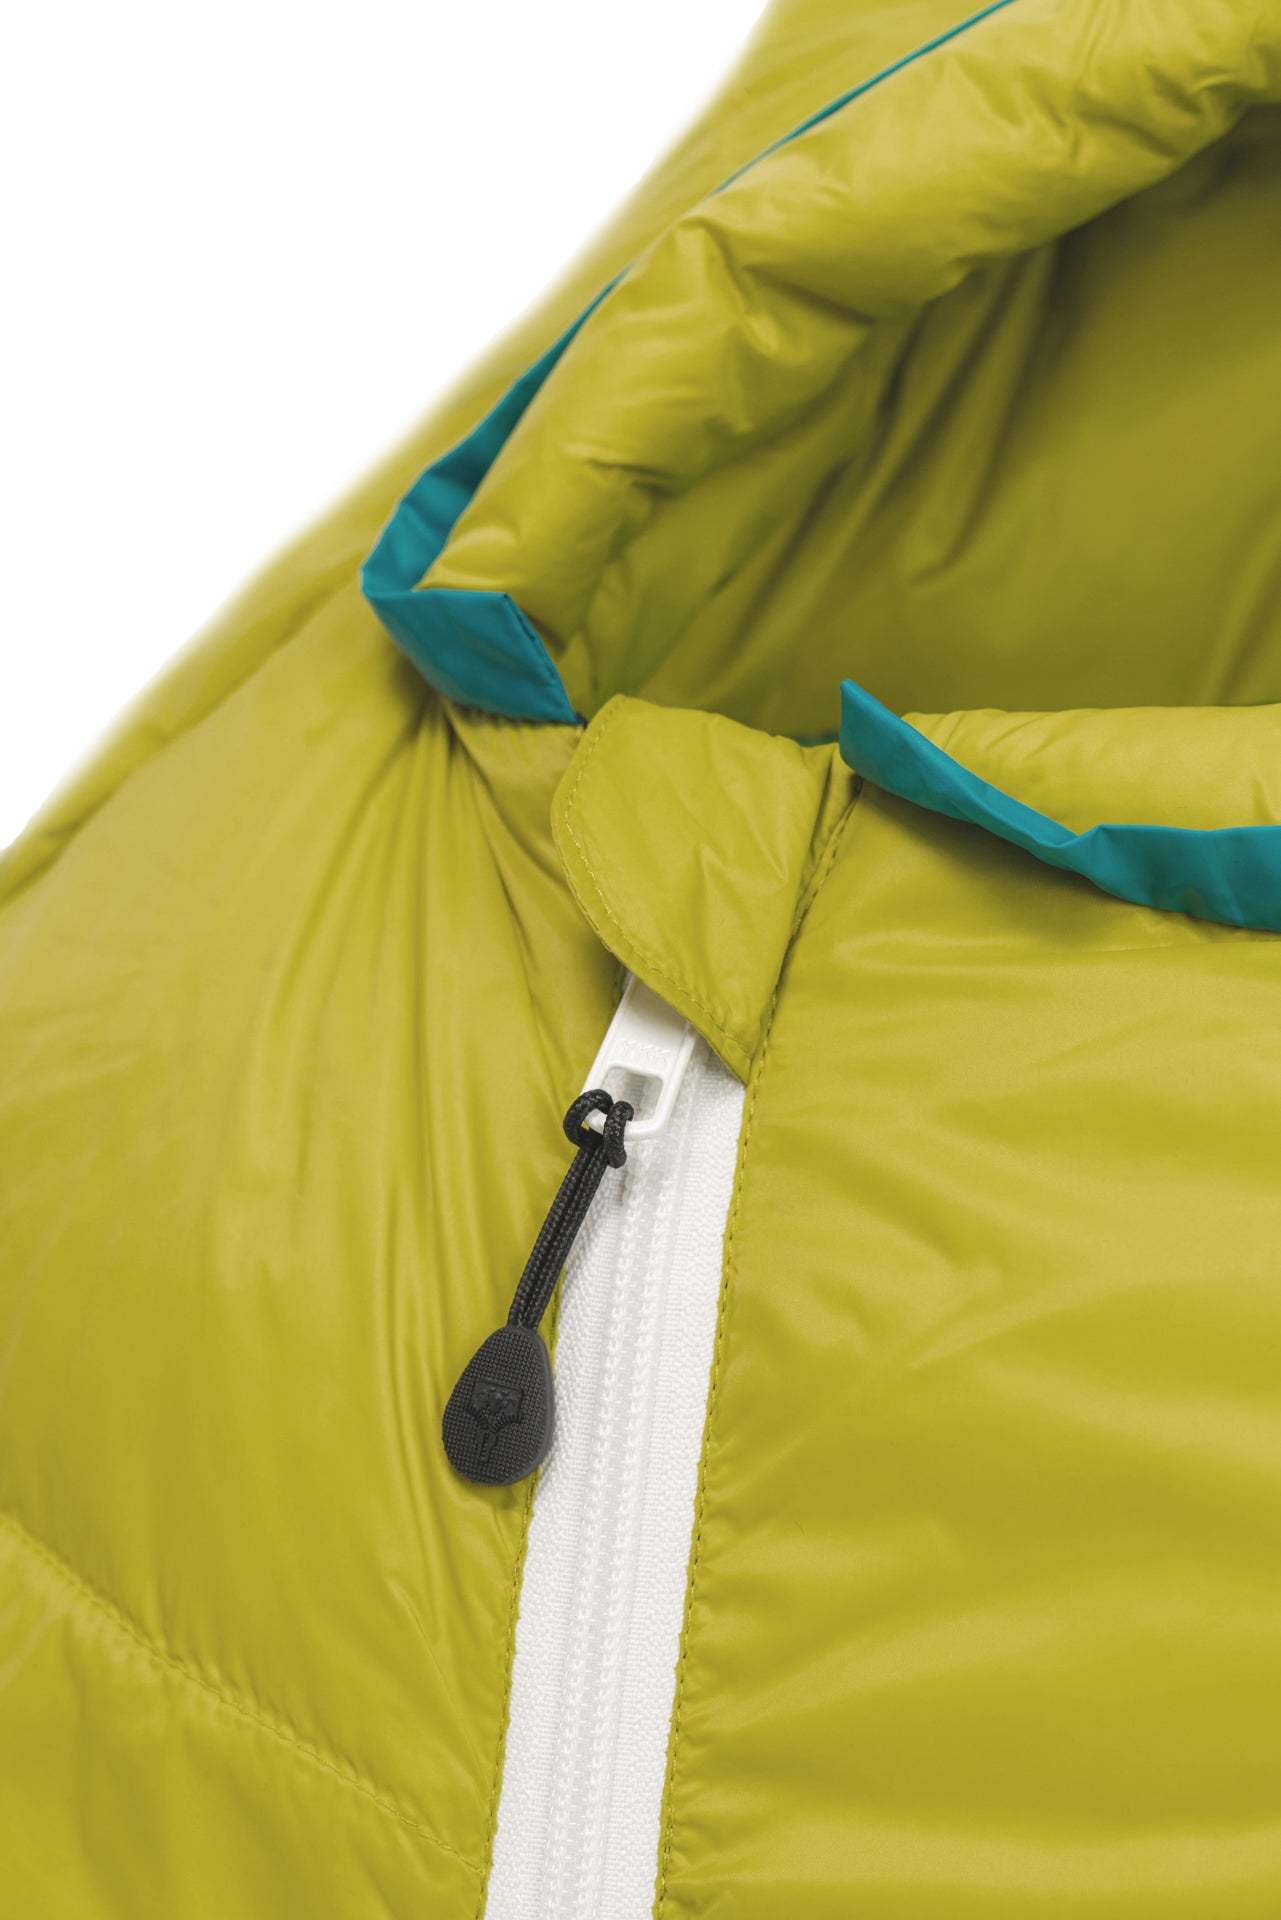 Grüezi bag Kinderschlafsack Biopod DownWool KidsTeen - Reißverschlussabdeckung